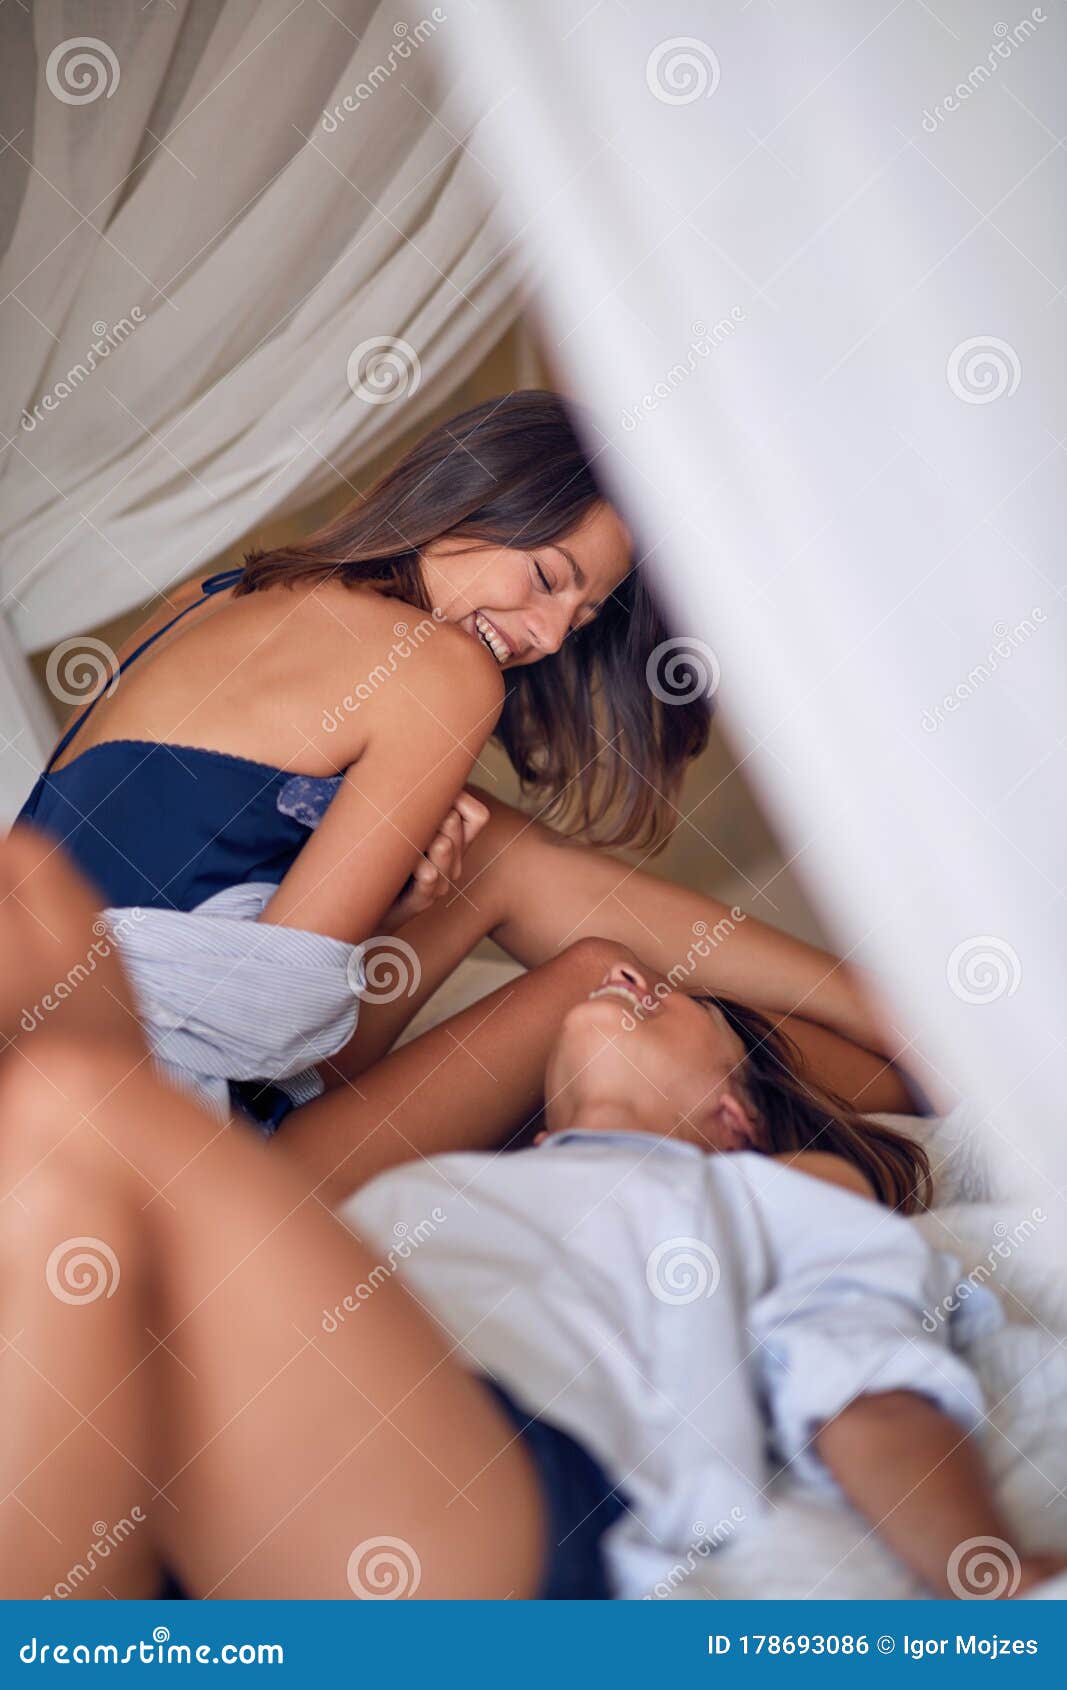 Lesbians Hot Kiss On Bed